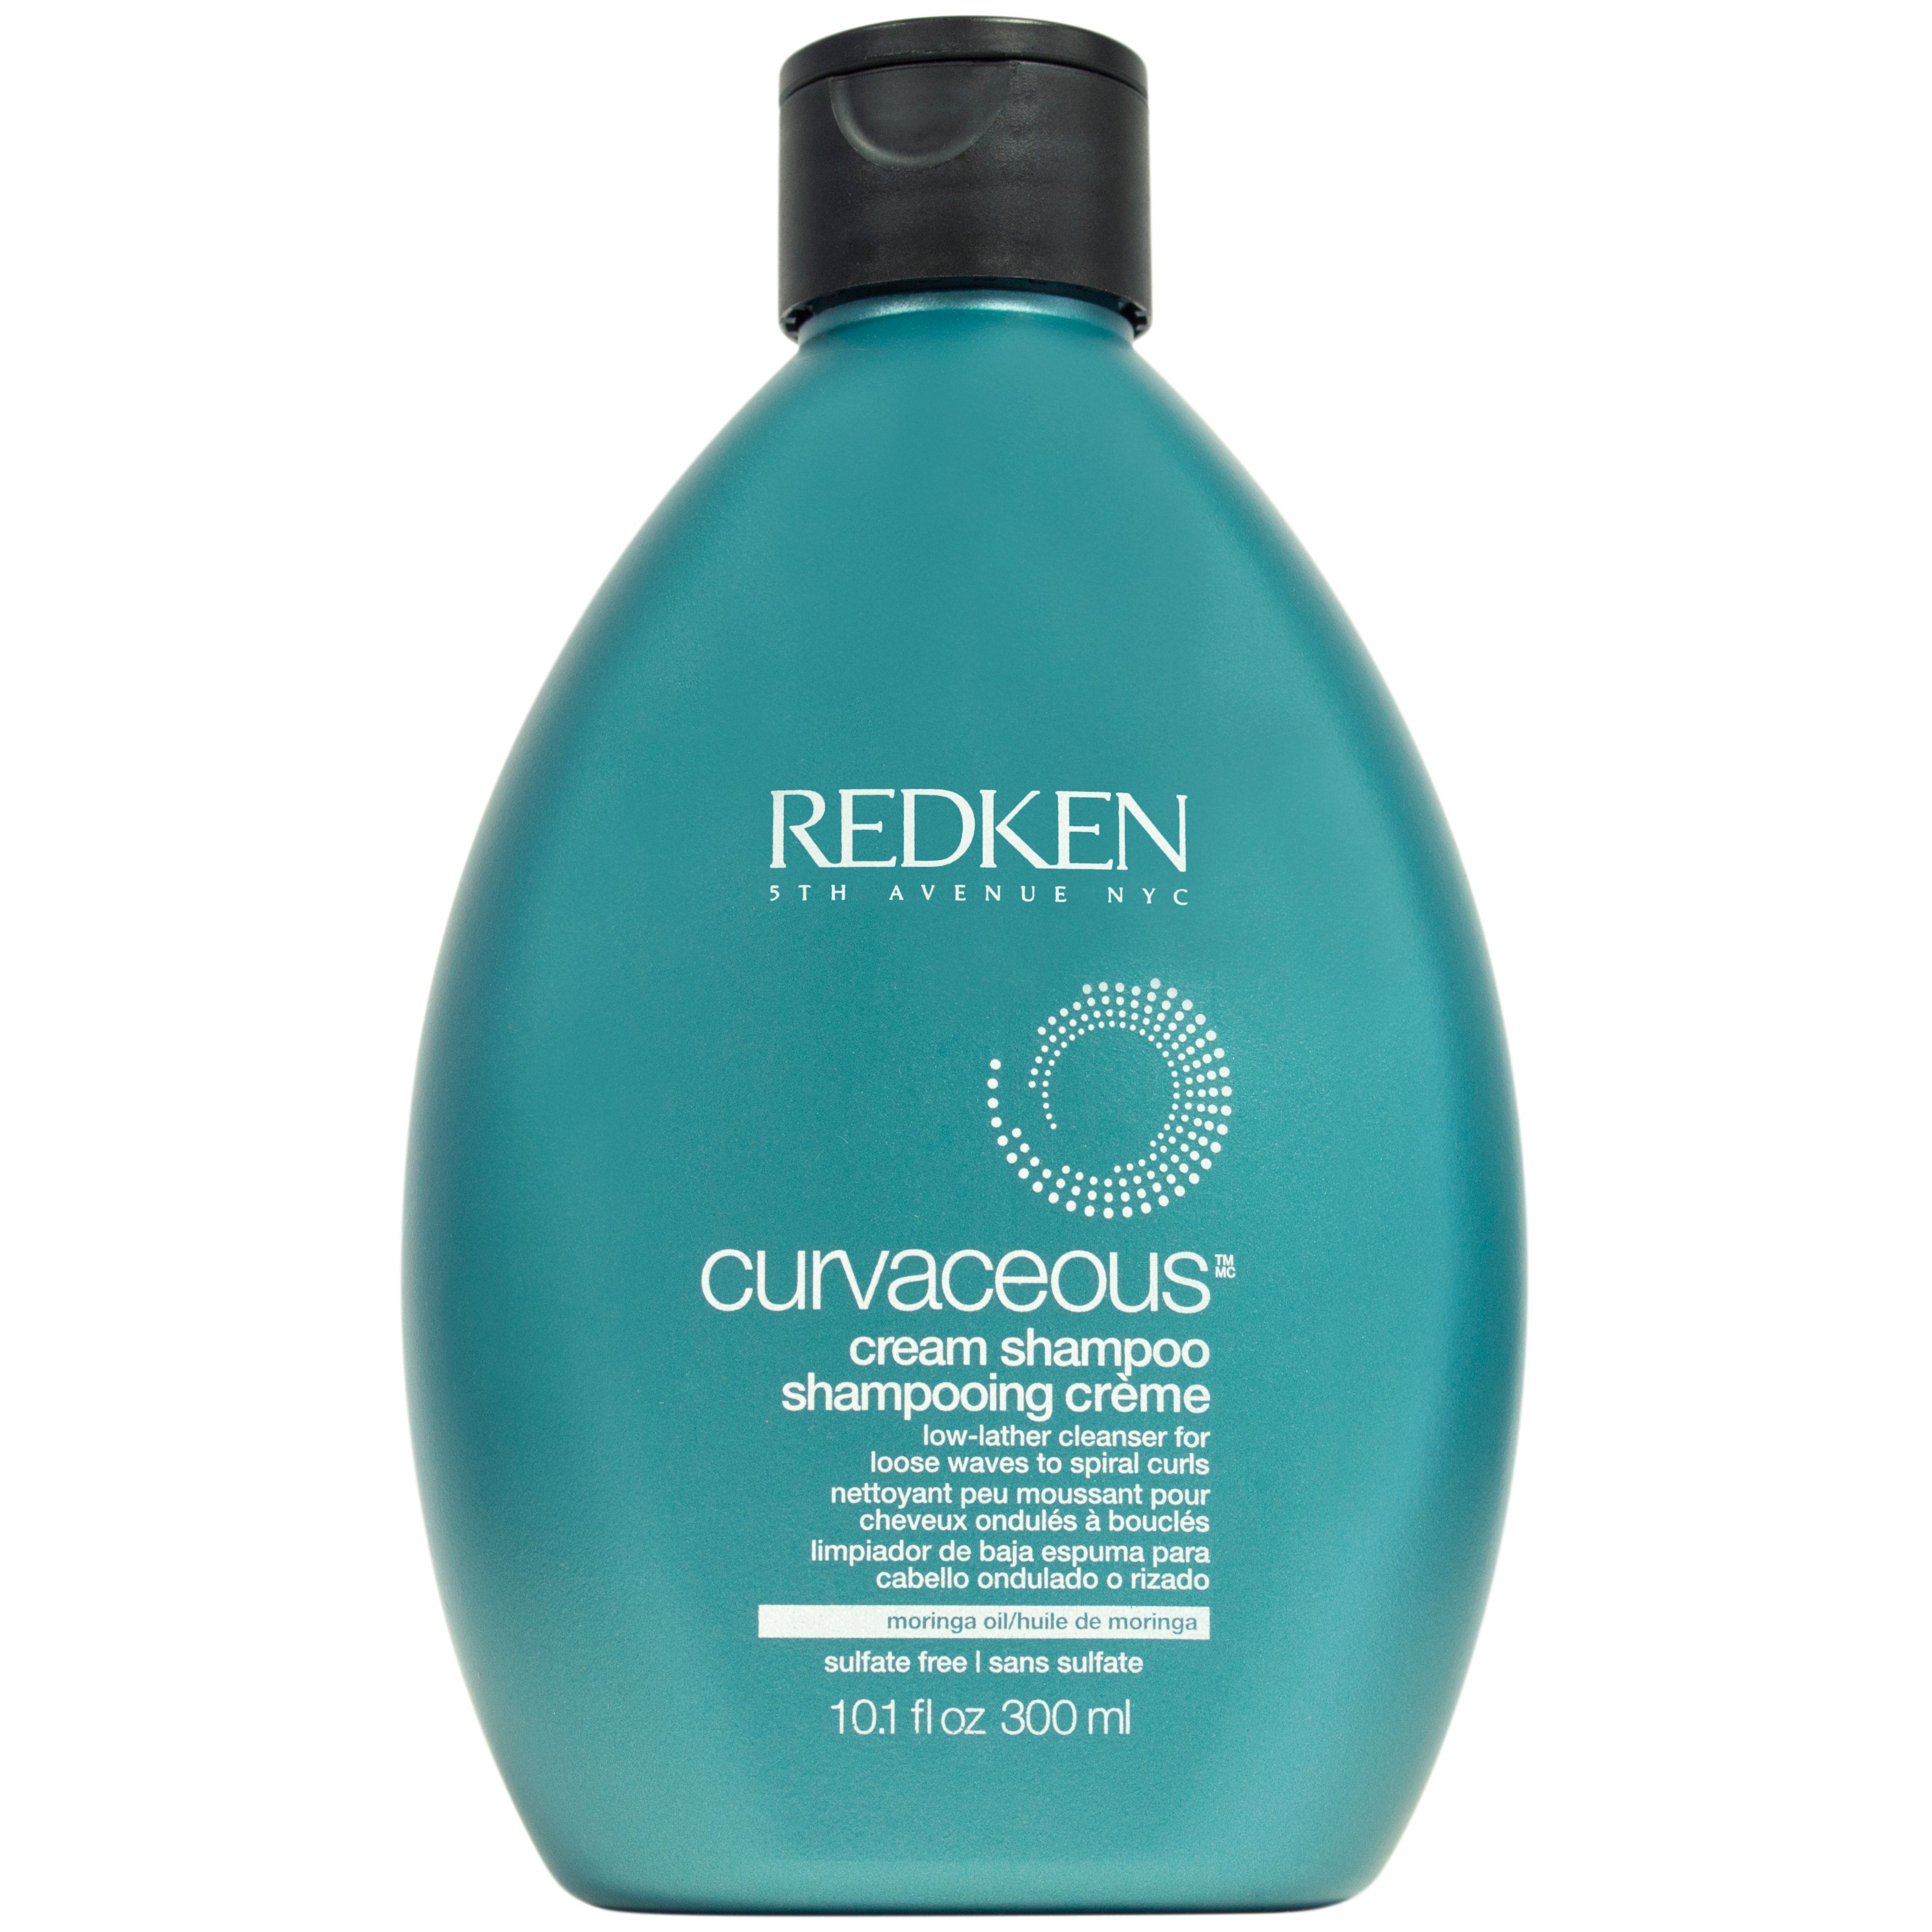  Redken  Curvaceous  Cream Shampoo  Shop Shampoo  